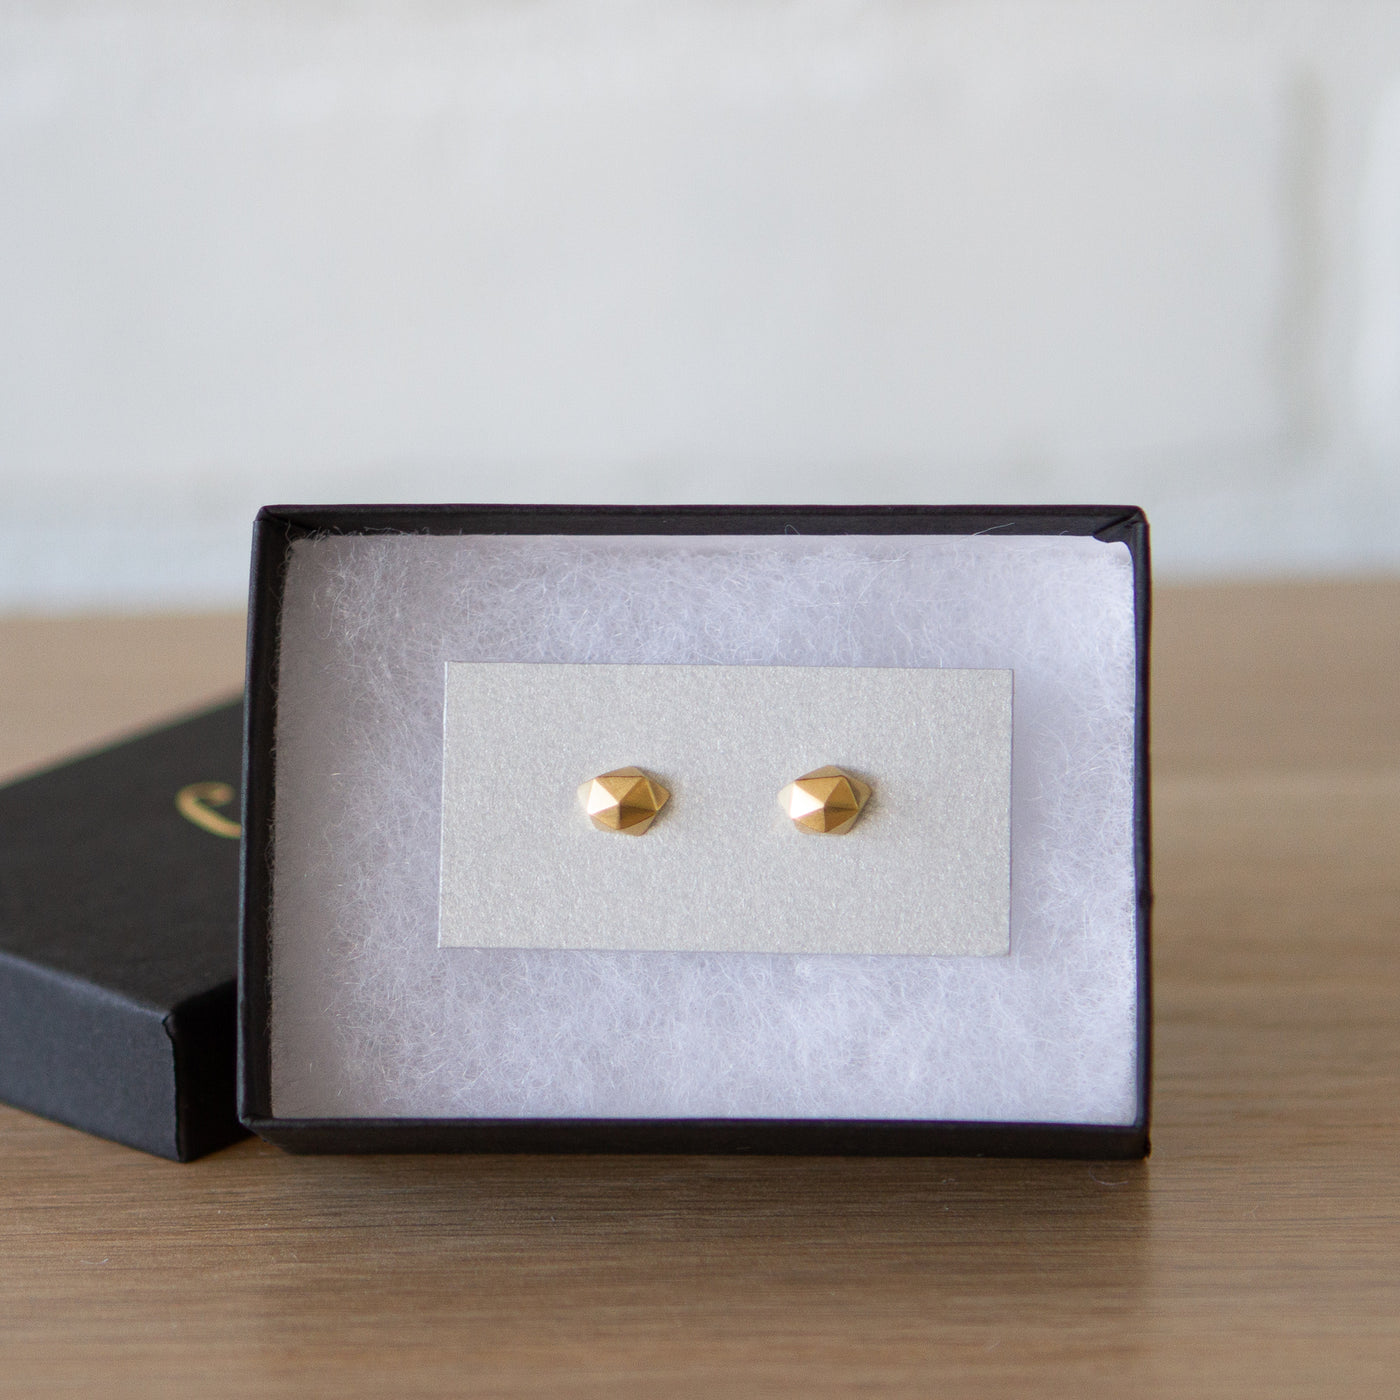 Tiny Fragment Vermeil Stud Earrings in a gift box | Corey Egan